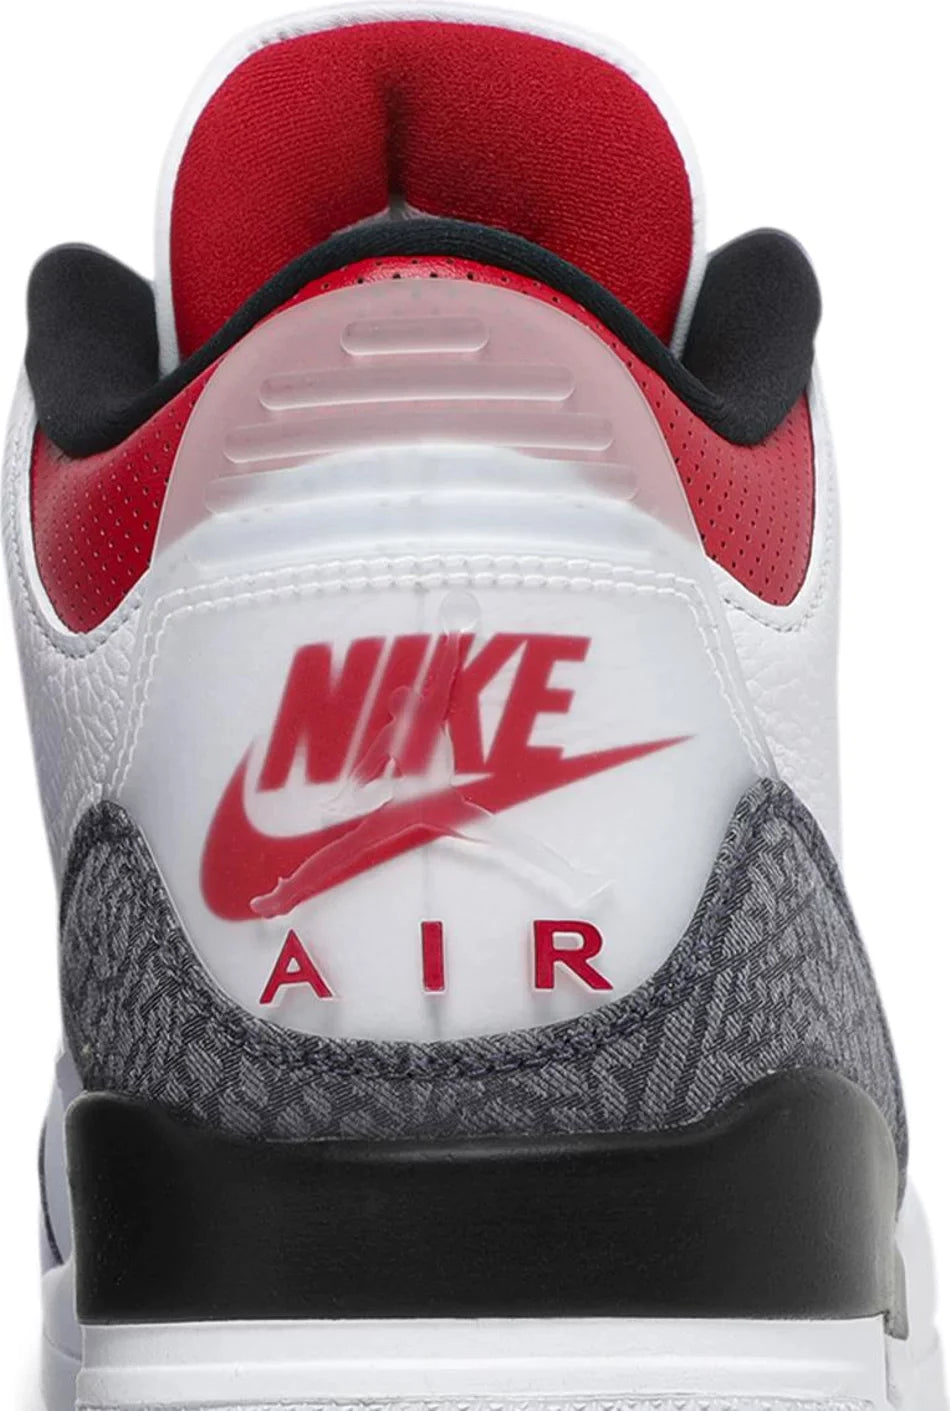 Nike Jordan 3 Retro SE Fire Red Denim (2020)